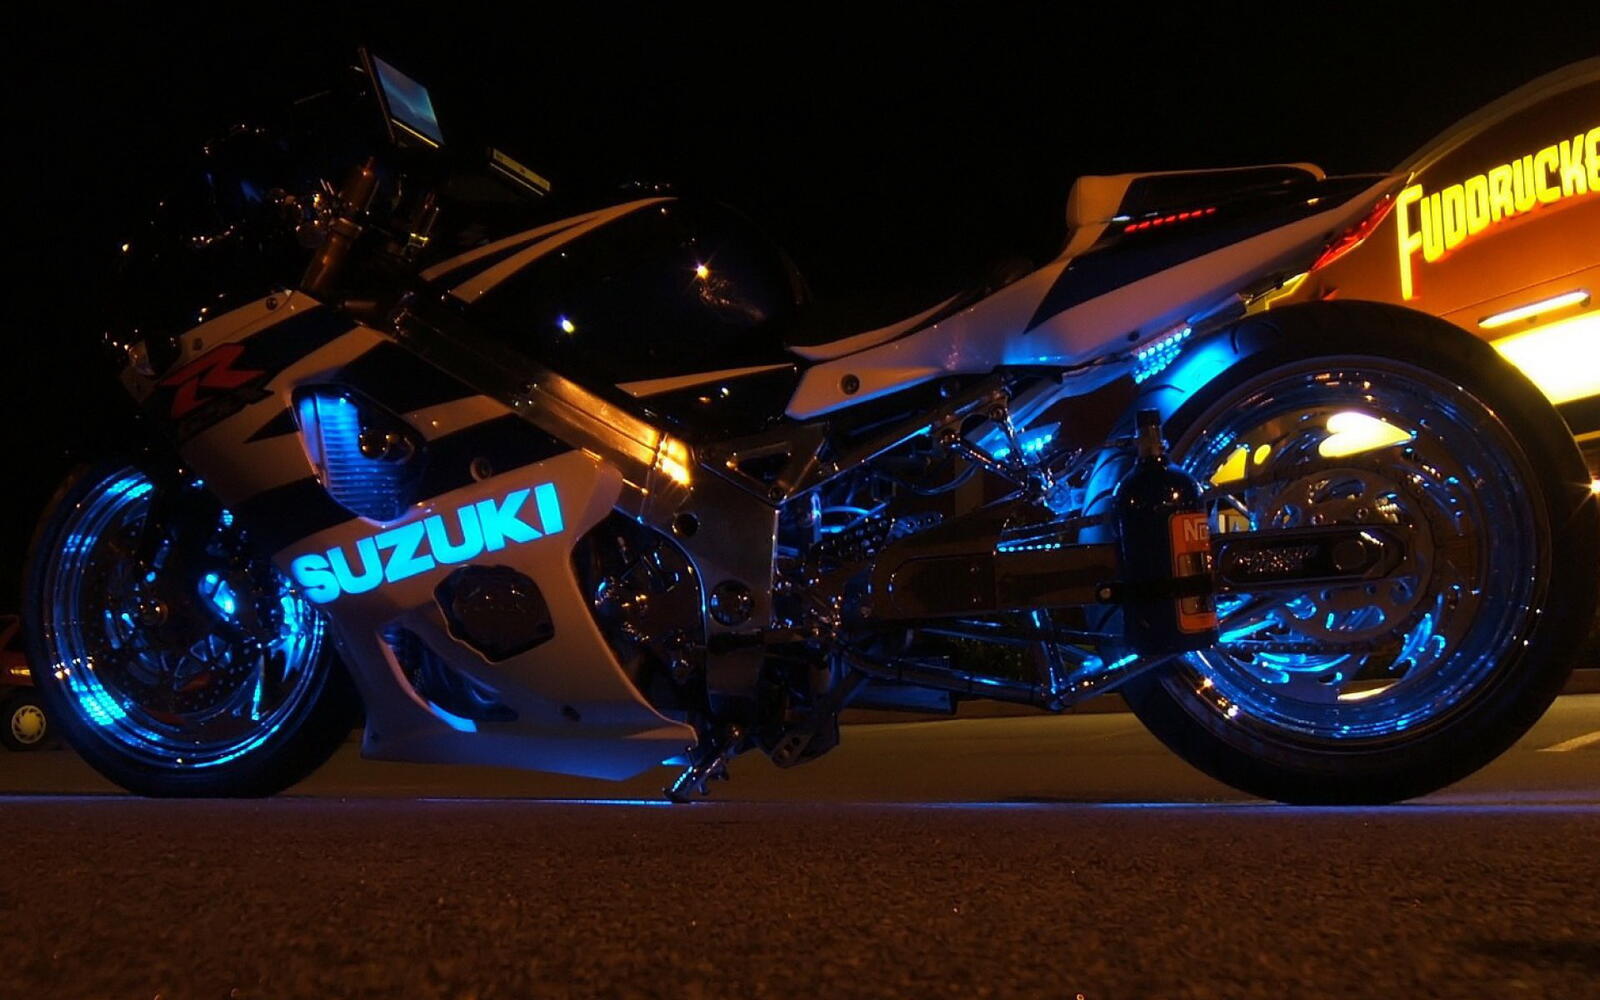 Wallpapers Suzuki sportbike night on the desktop